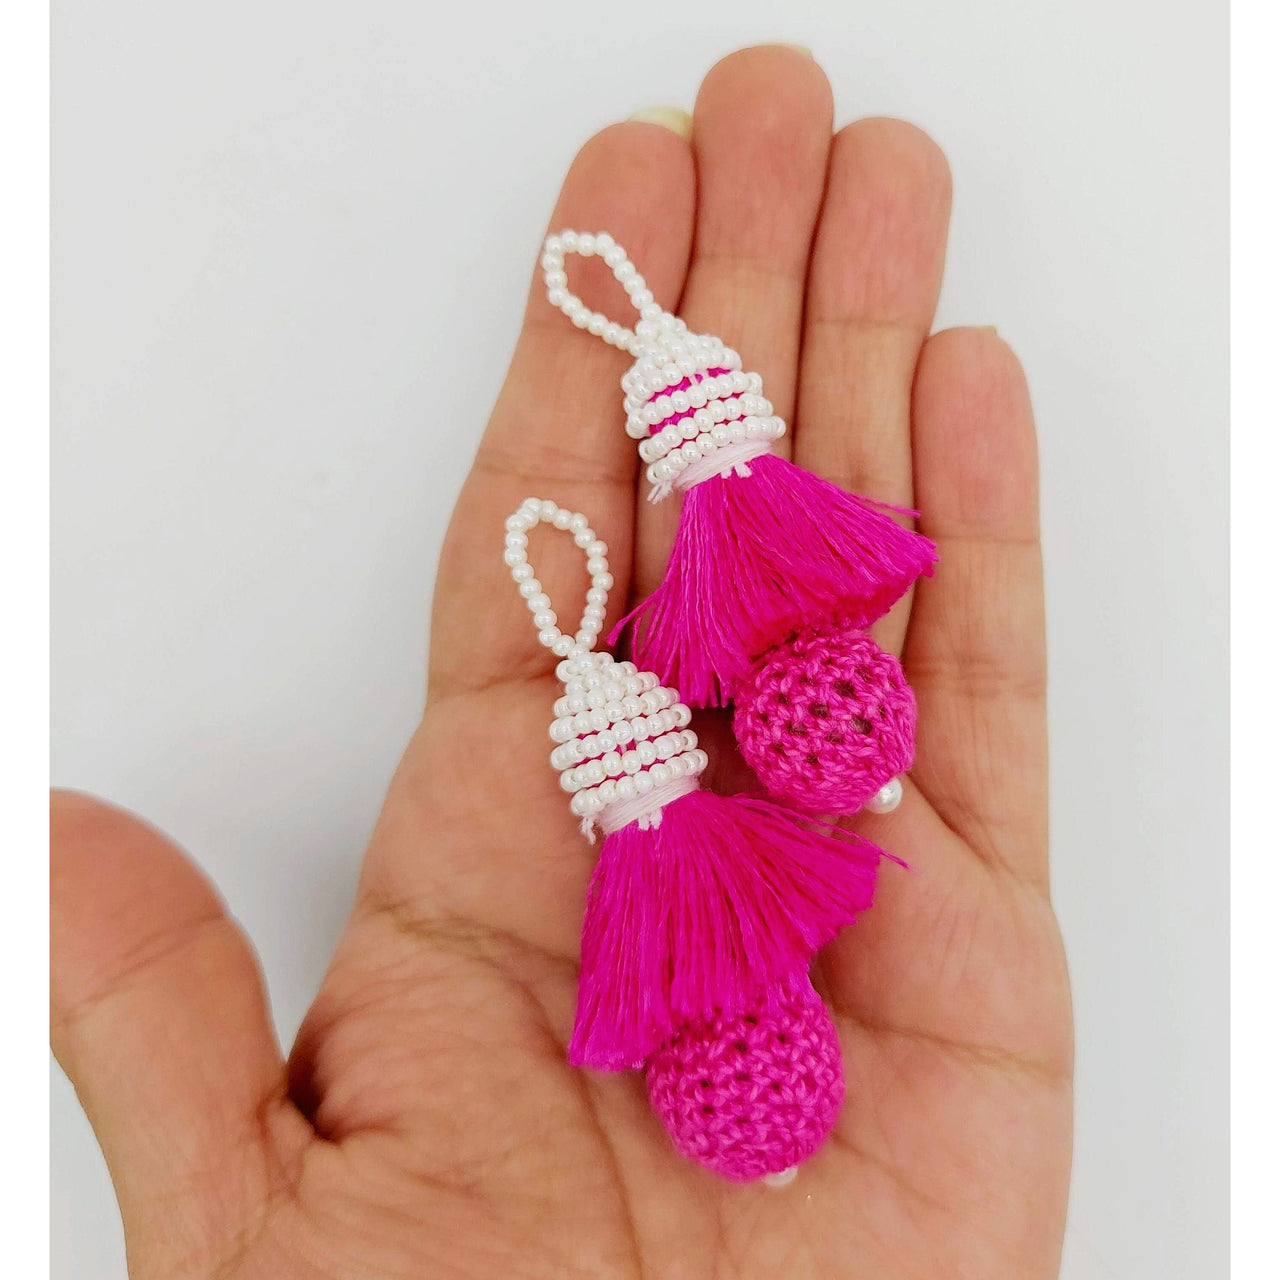 Fuchsia Pink Crochet Ball Tassels With White Pearls Beads, Tassel Charms, Nylon Tassels x 2